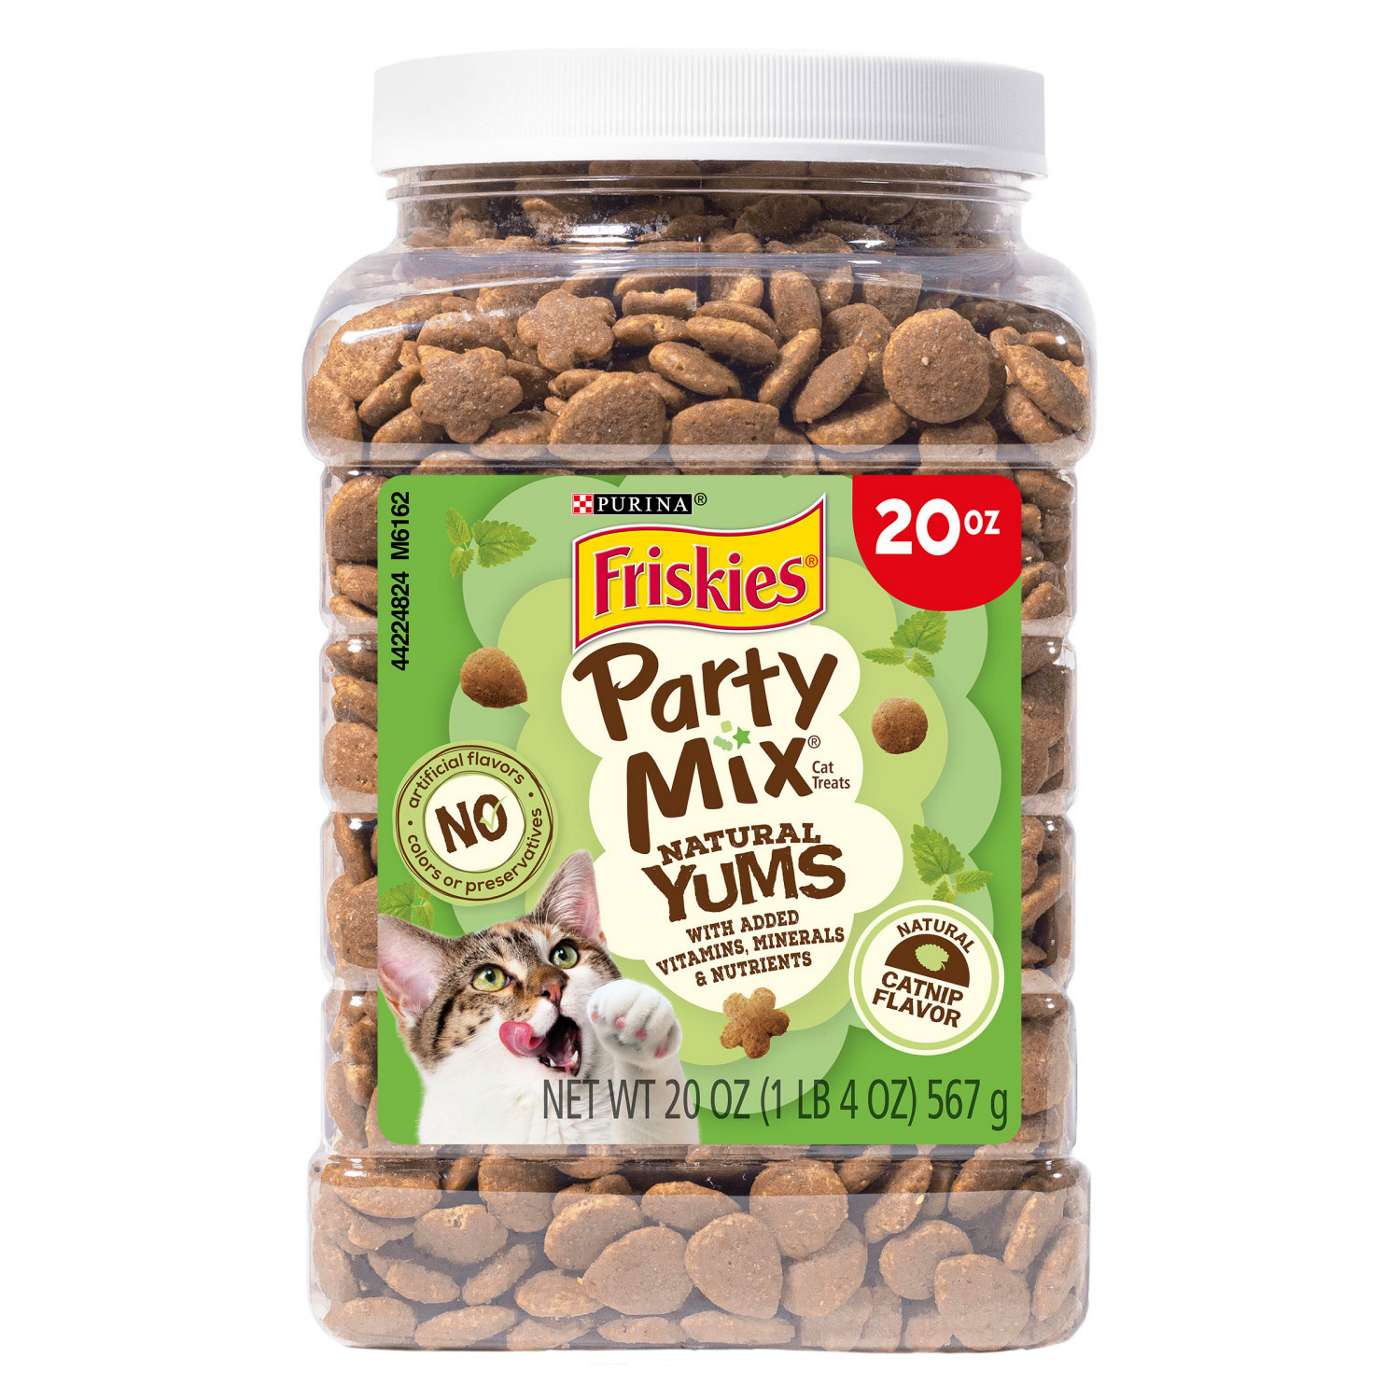 Friskies Purina Friskies Made in USA Facilities, Natural Cat Treats, Party Mix Natural Yums Catnip Flavor; image 1 of 6